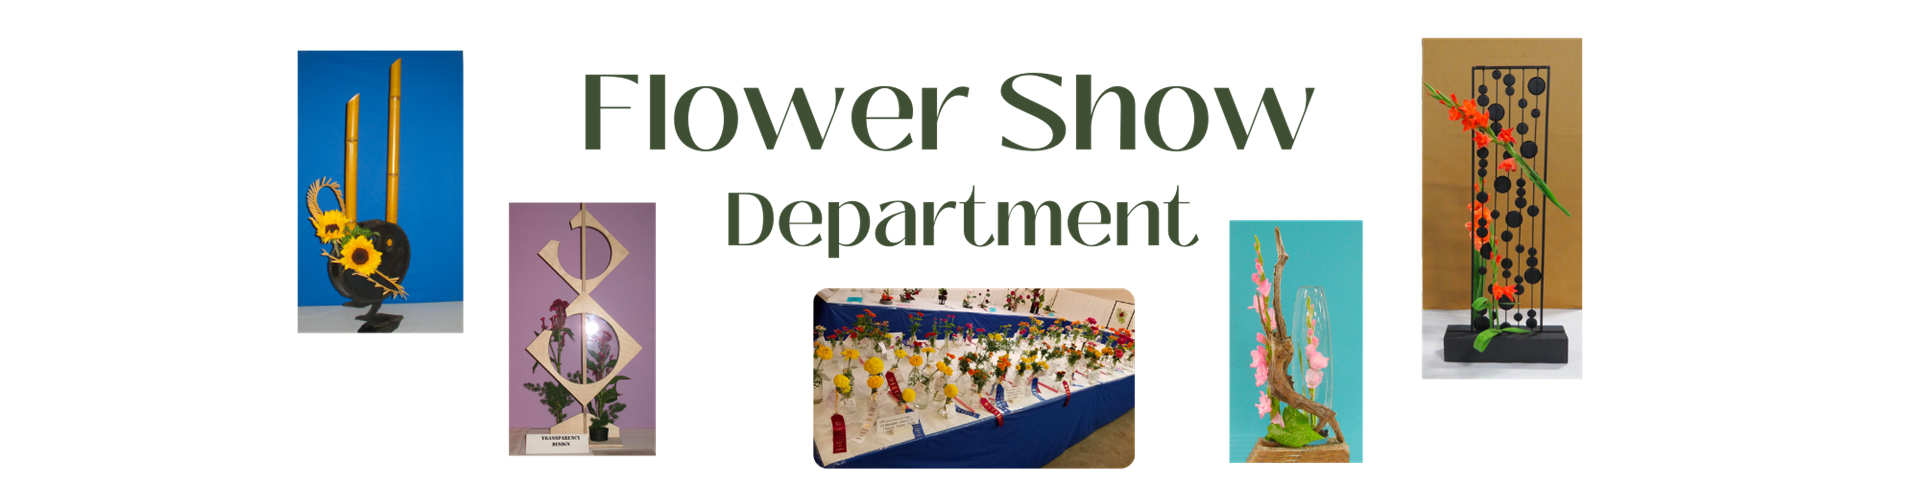 Flower Show Department